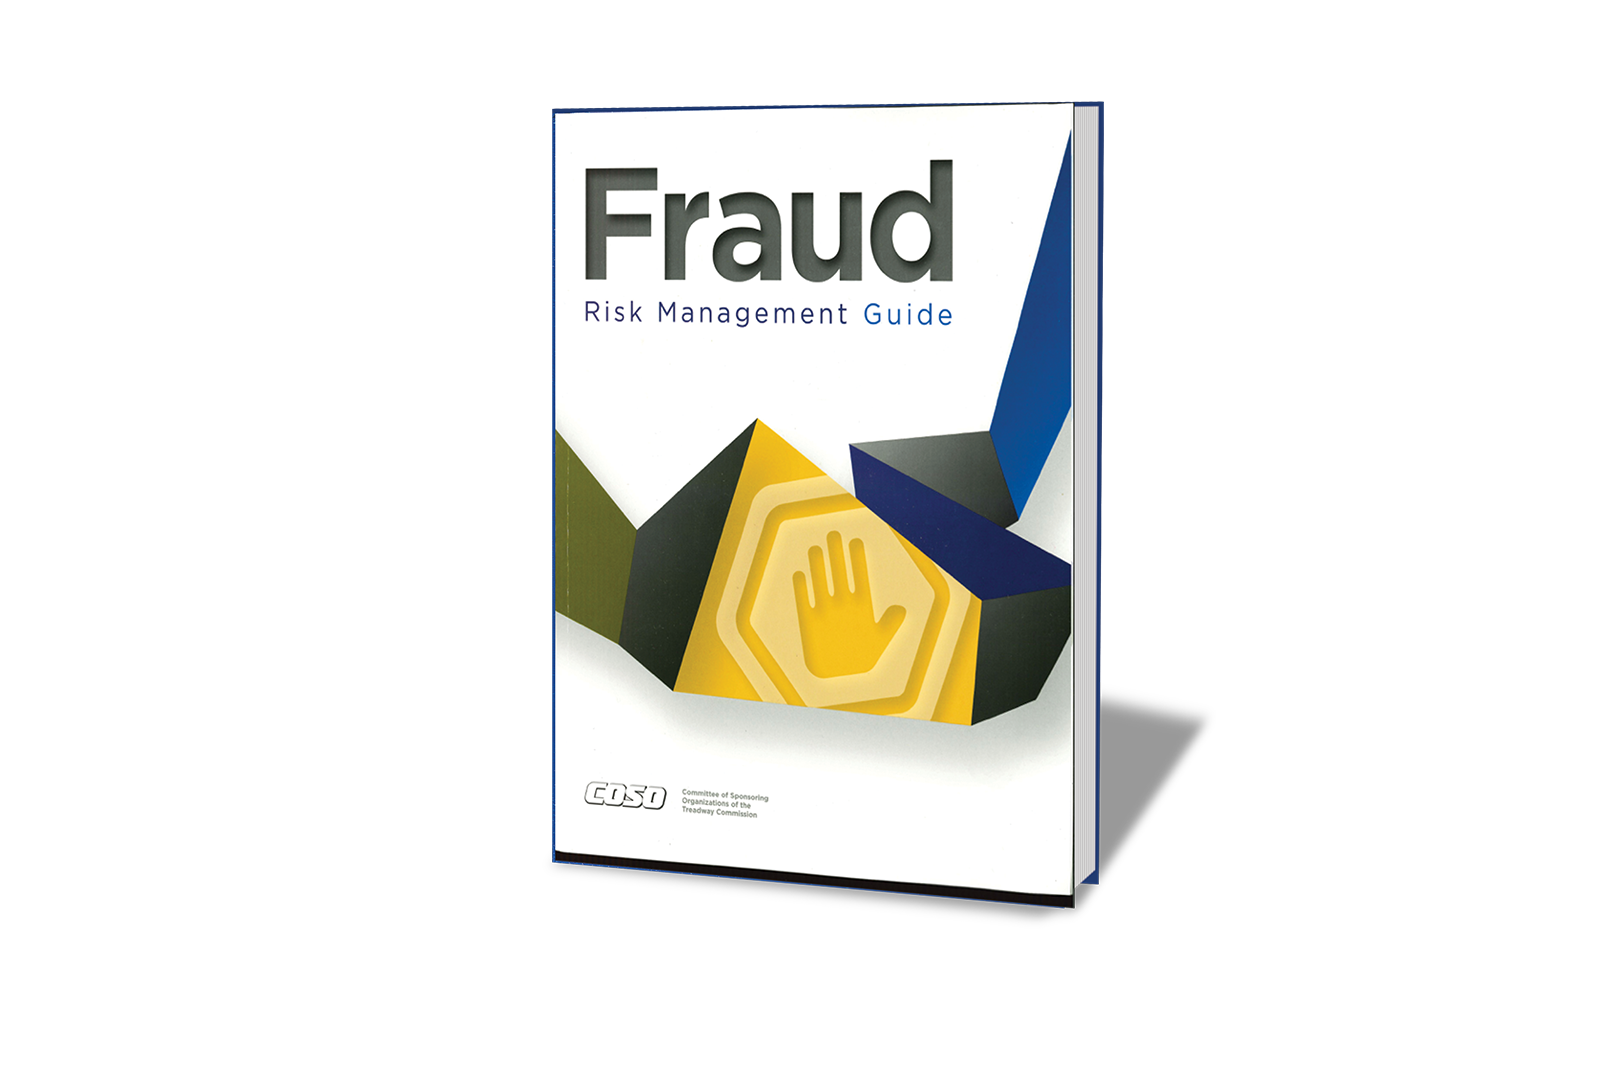 Fraud Risk Management Guide